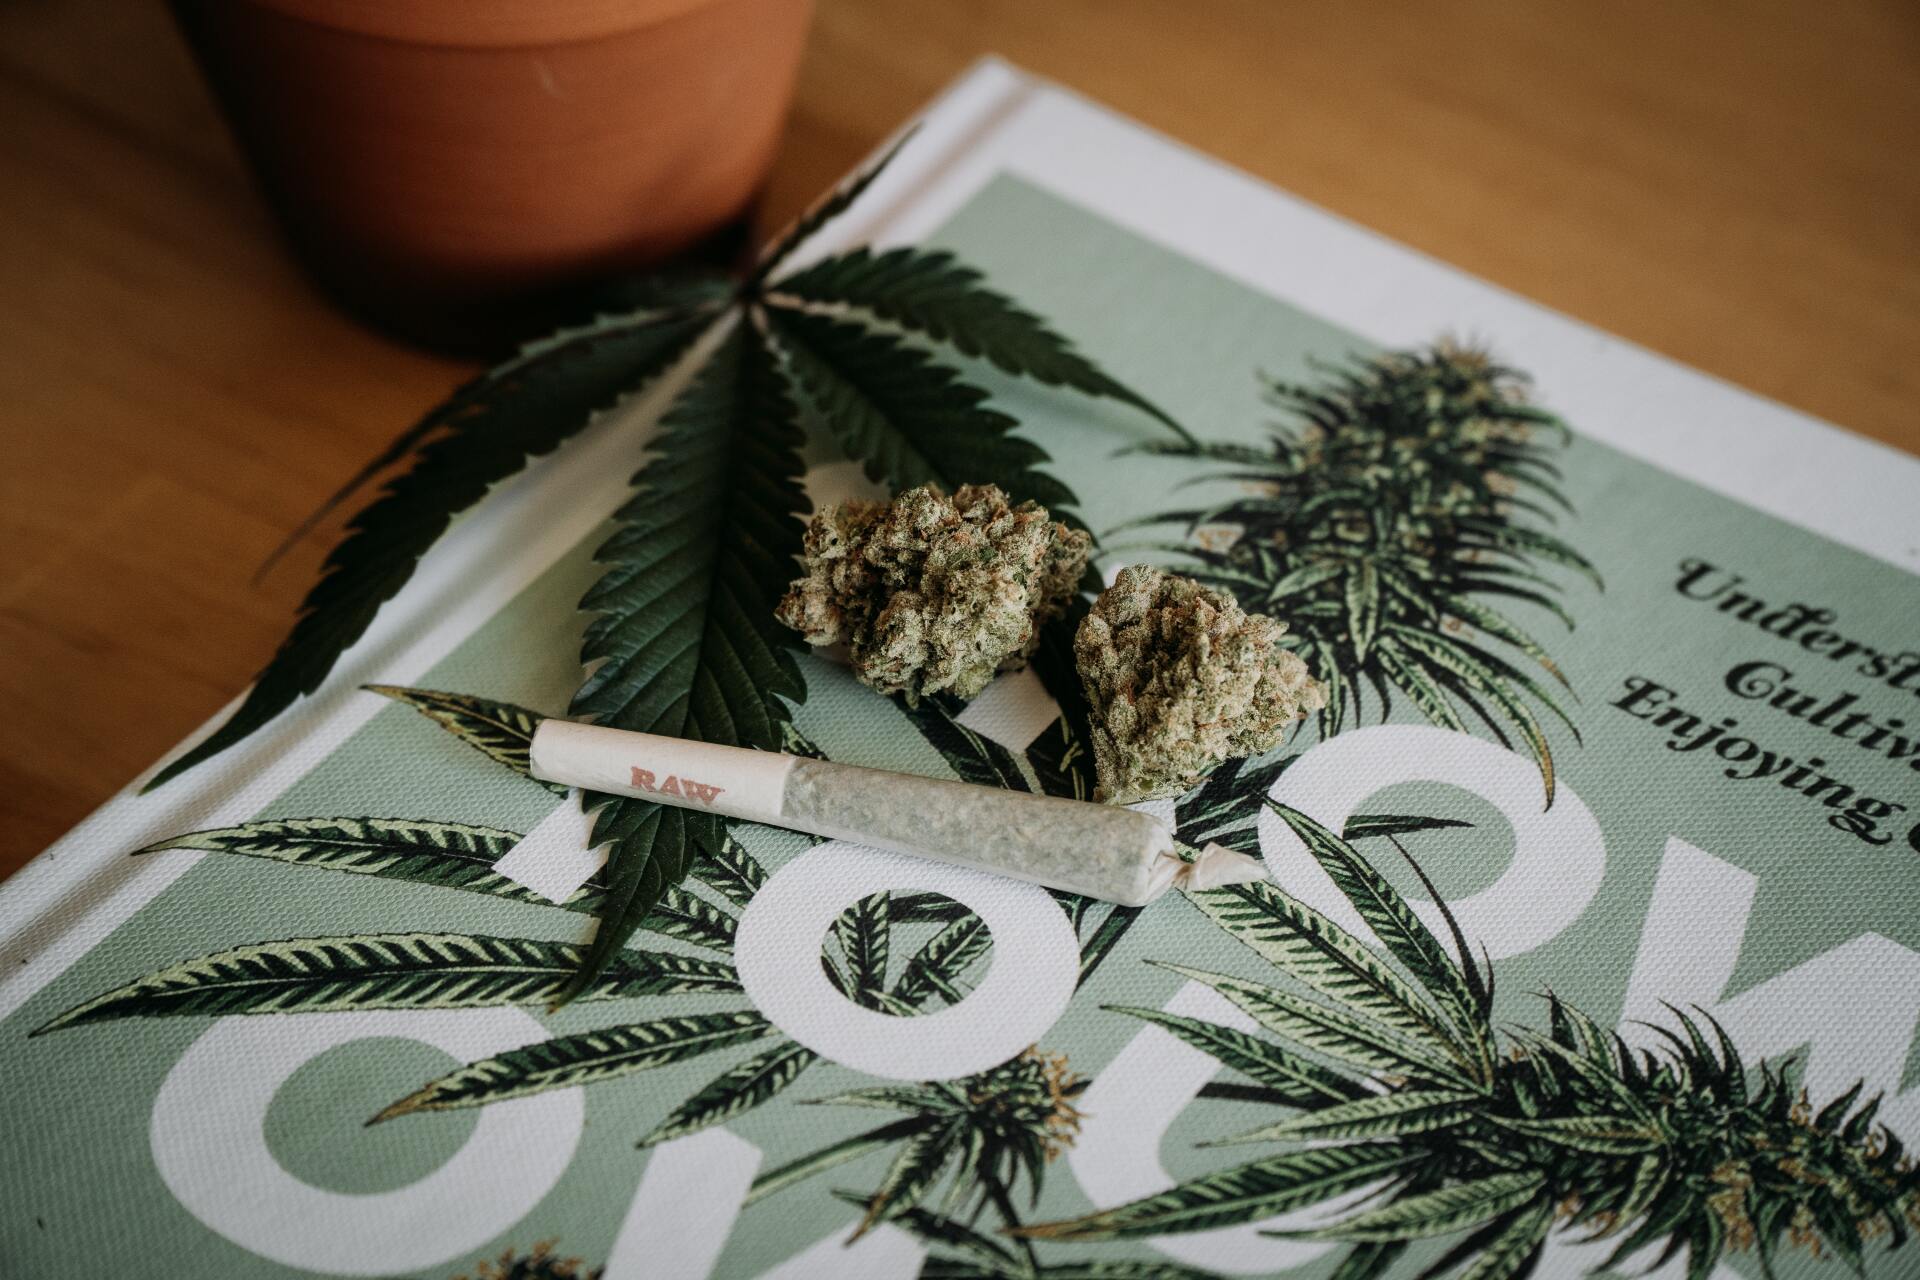 Cannabis and moon